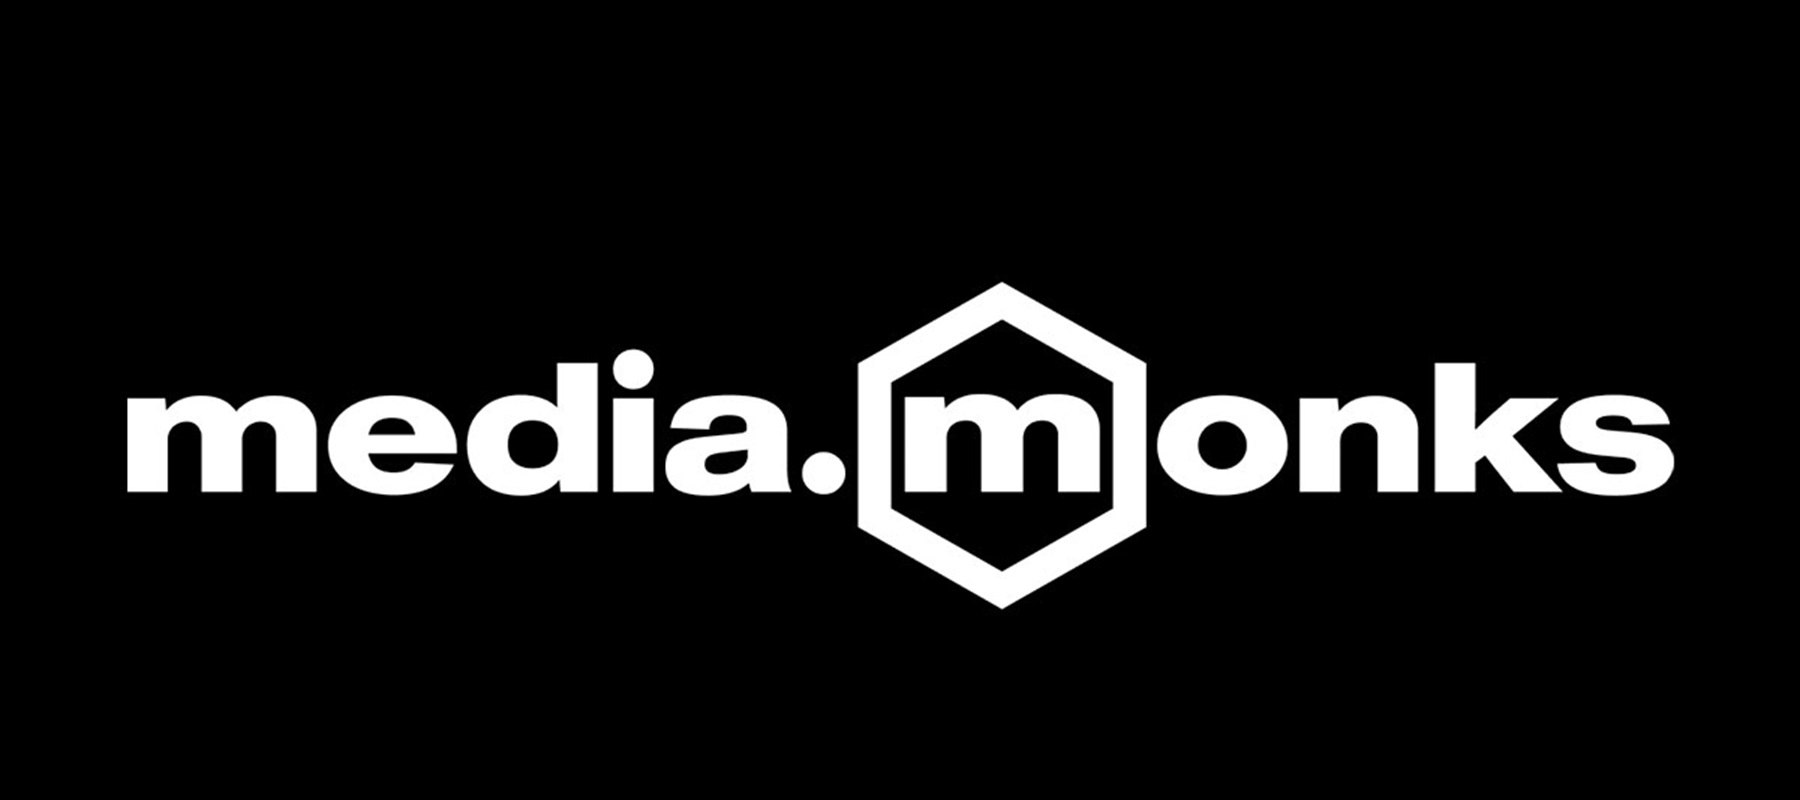 Media.Monks appoints Dave Carey Global EVP Studios & Embedded Solutions